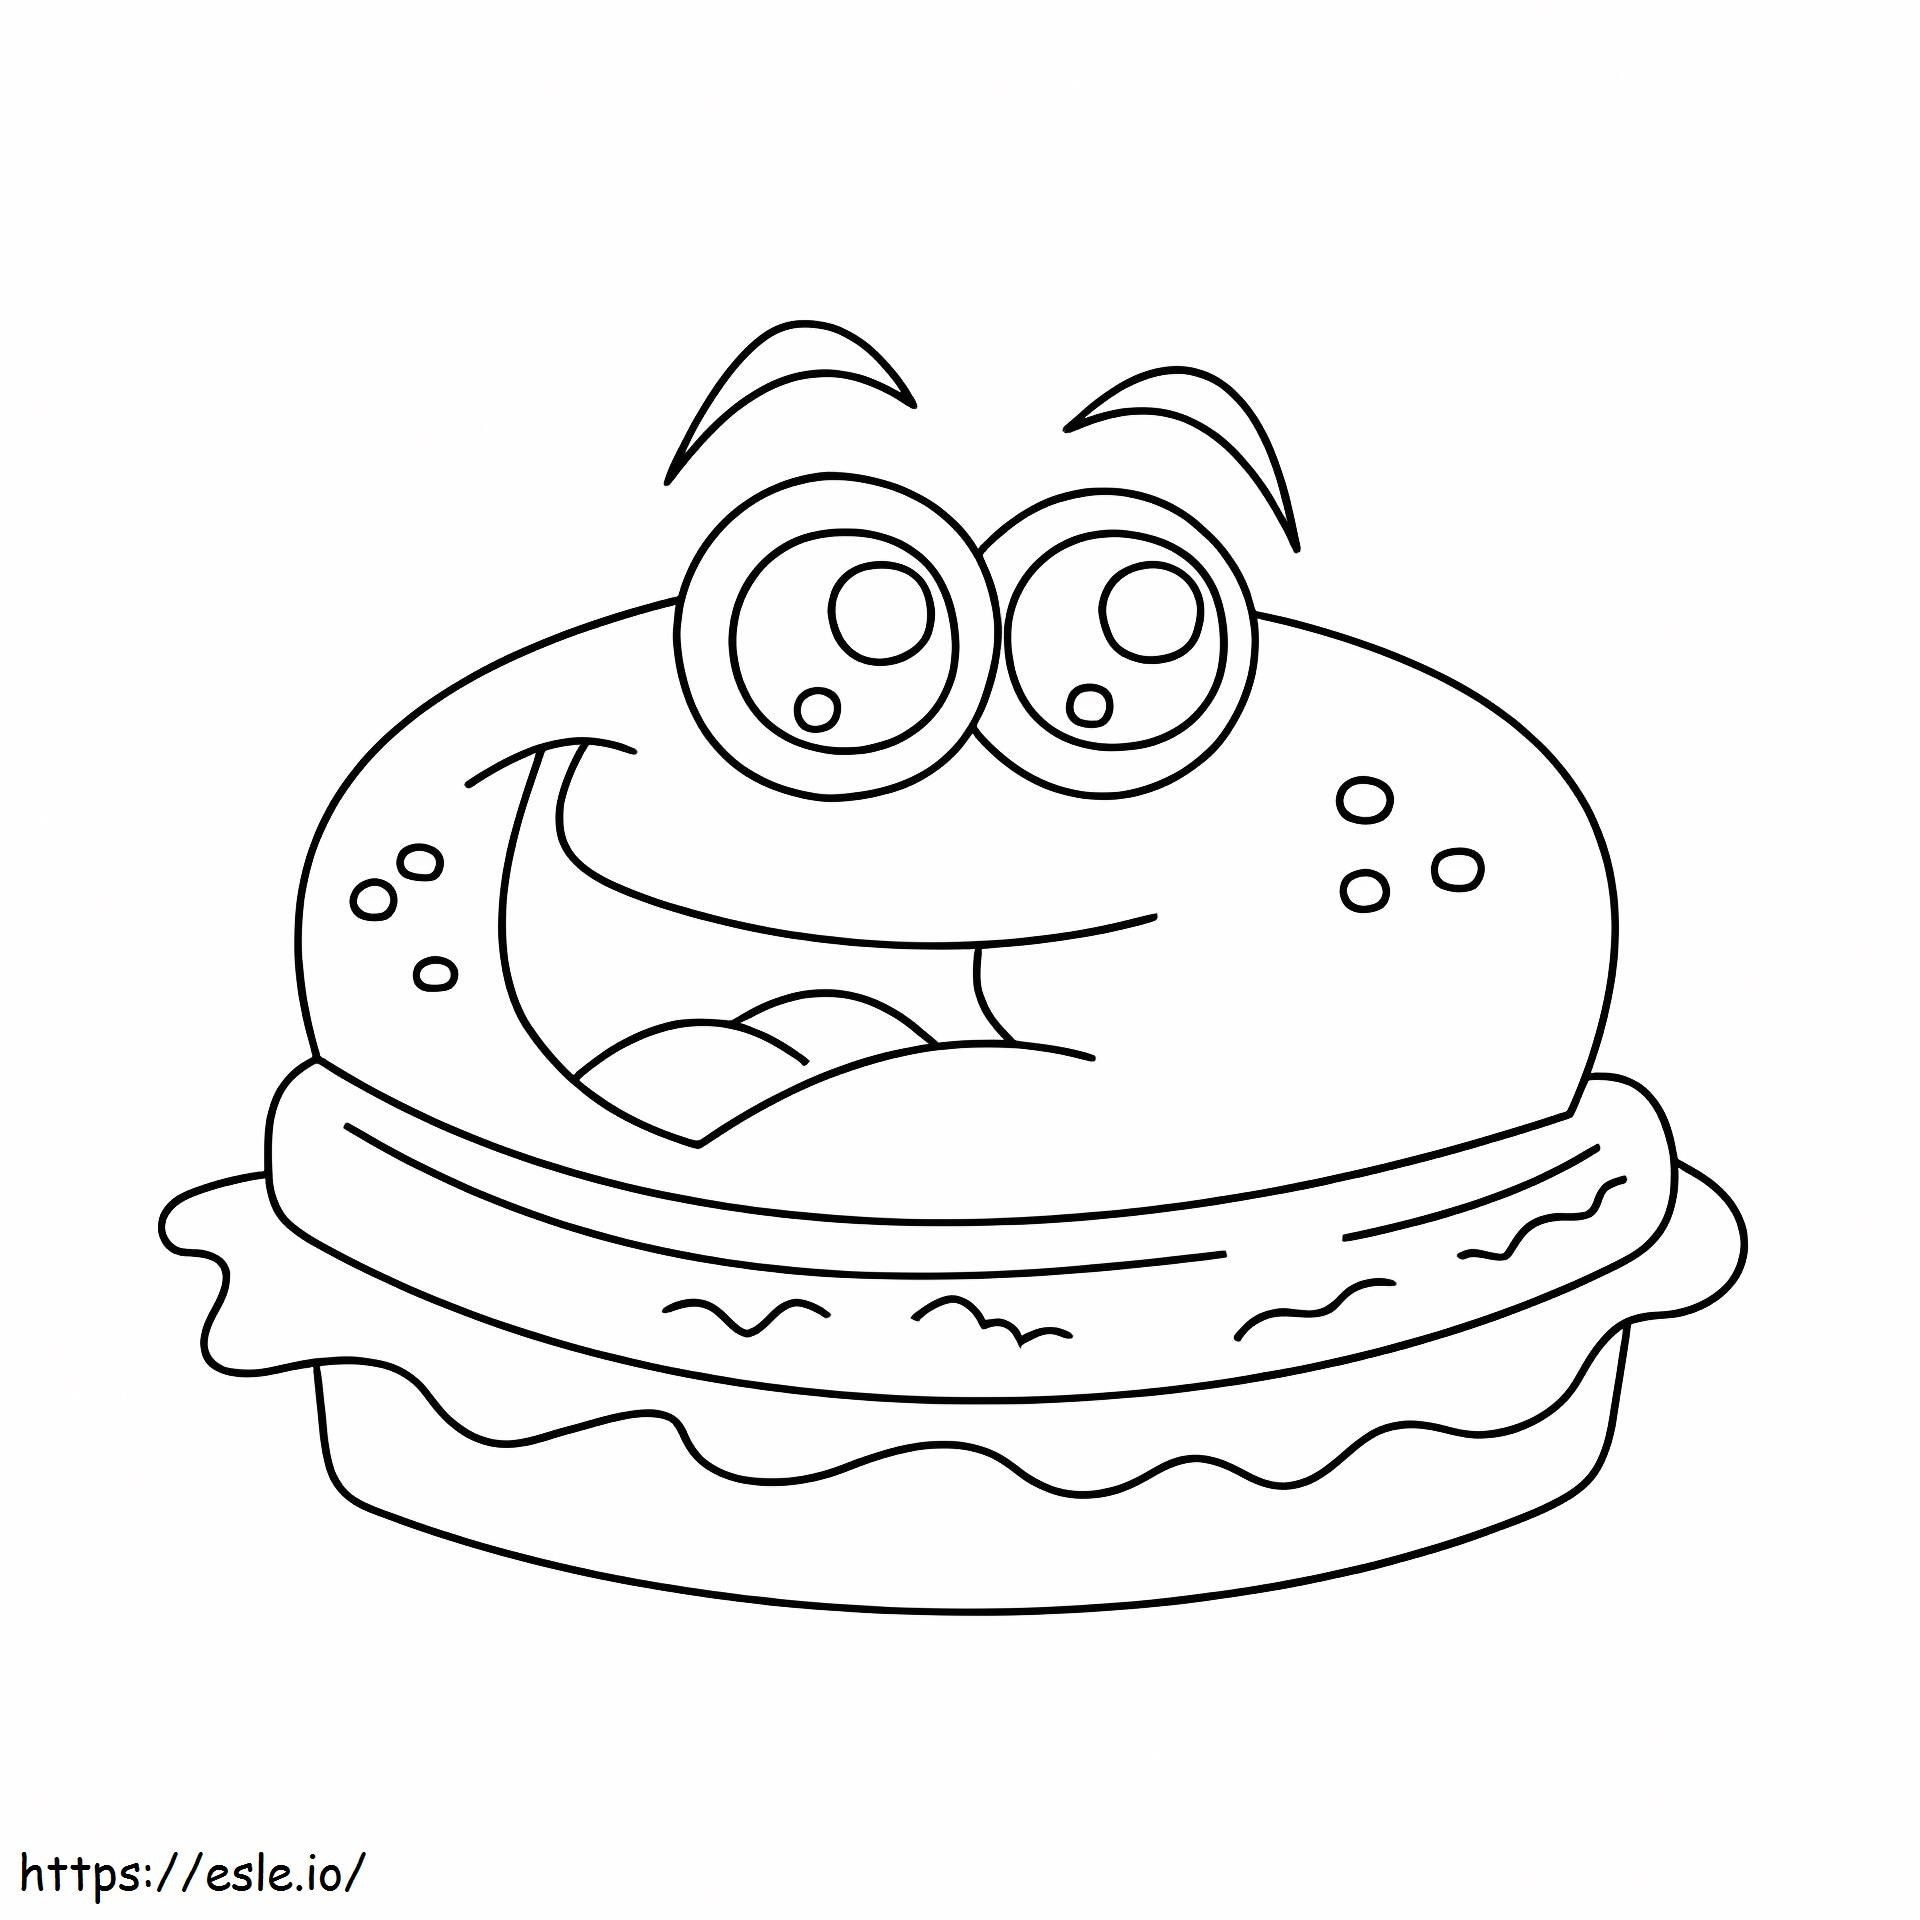 Coloriage Hamburger de dessin animé à imprimer dessin